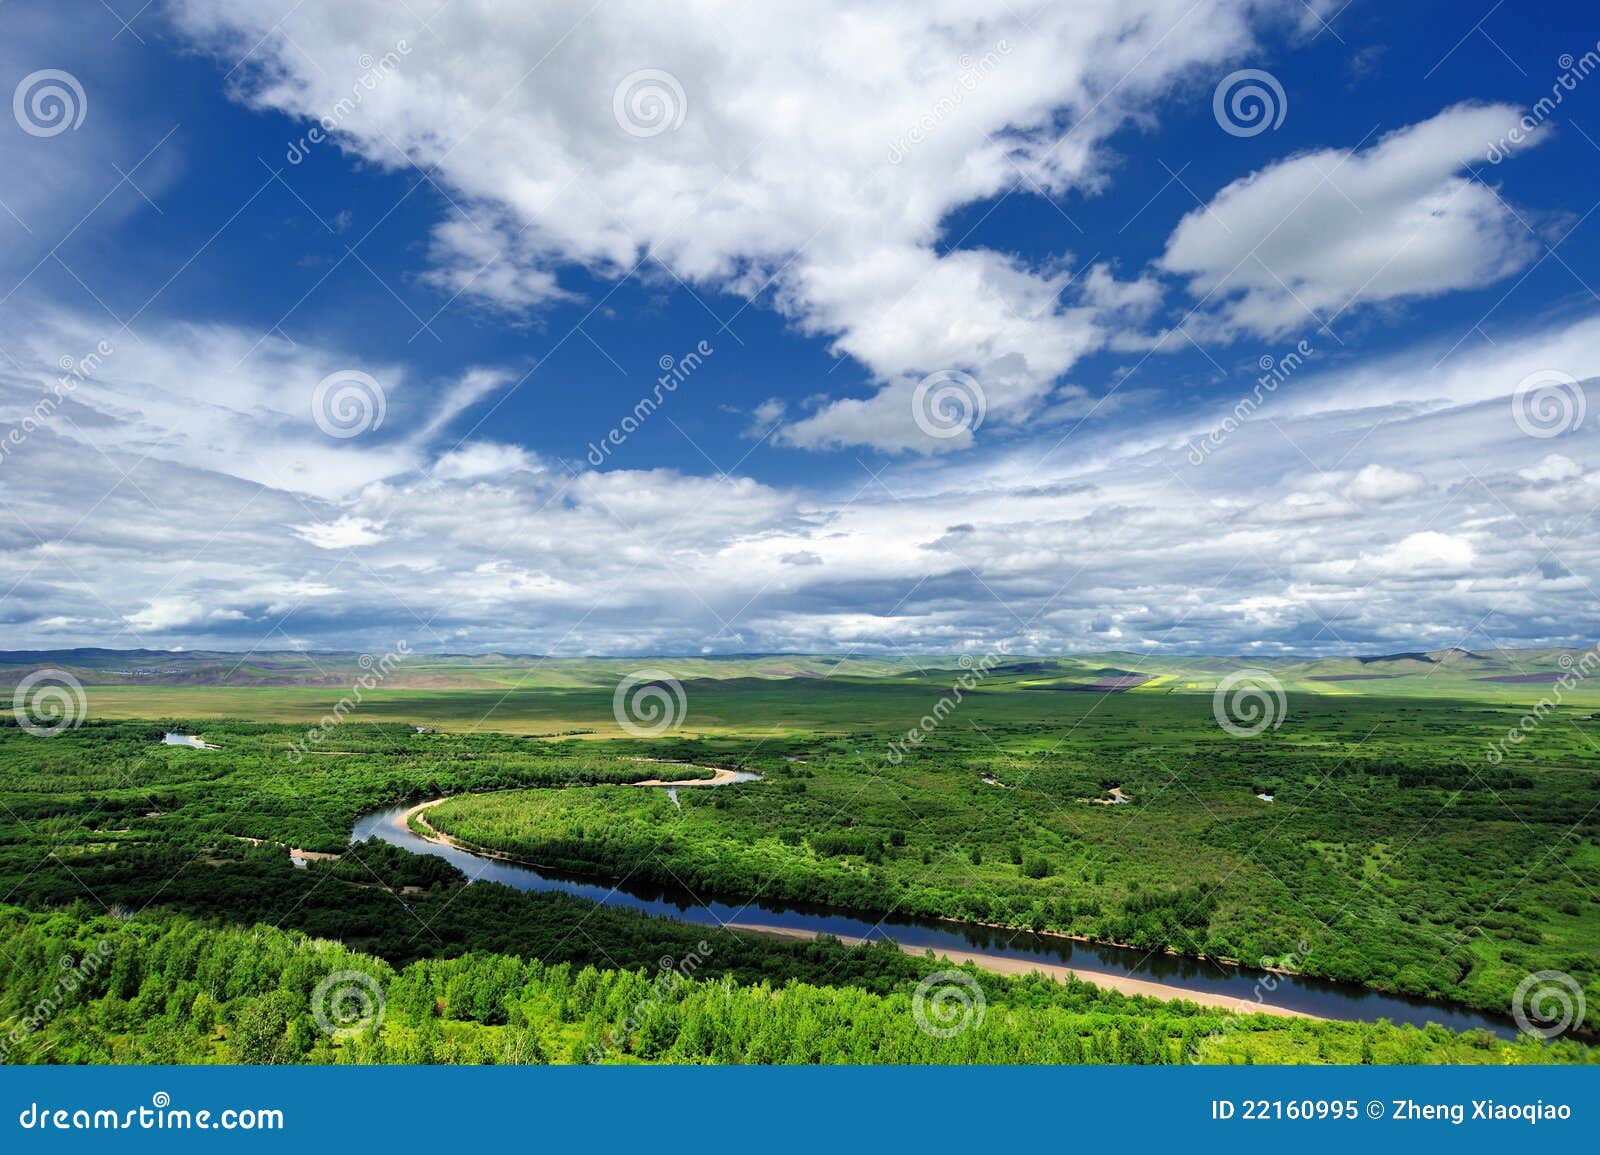 wetland, river and forest landscape